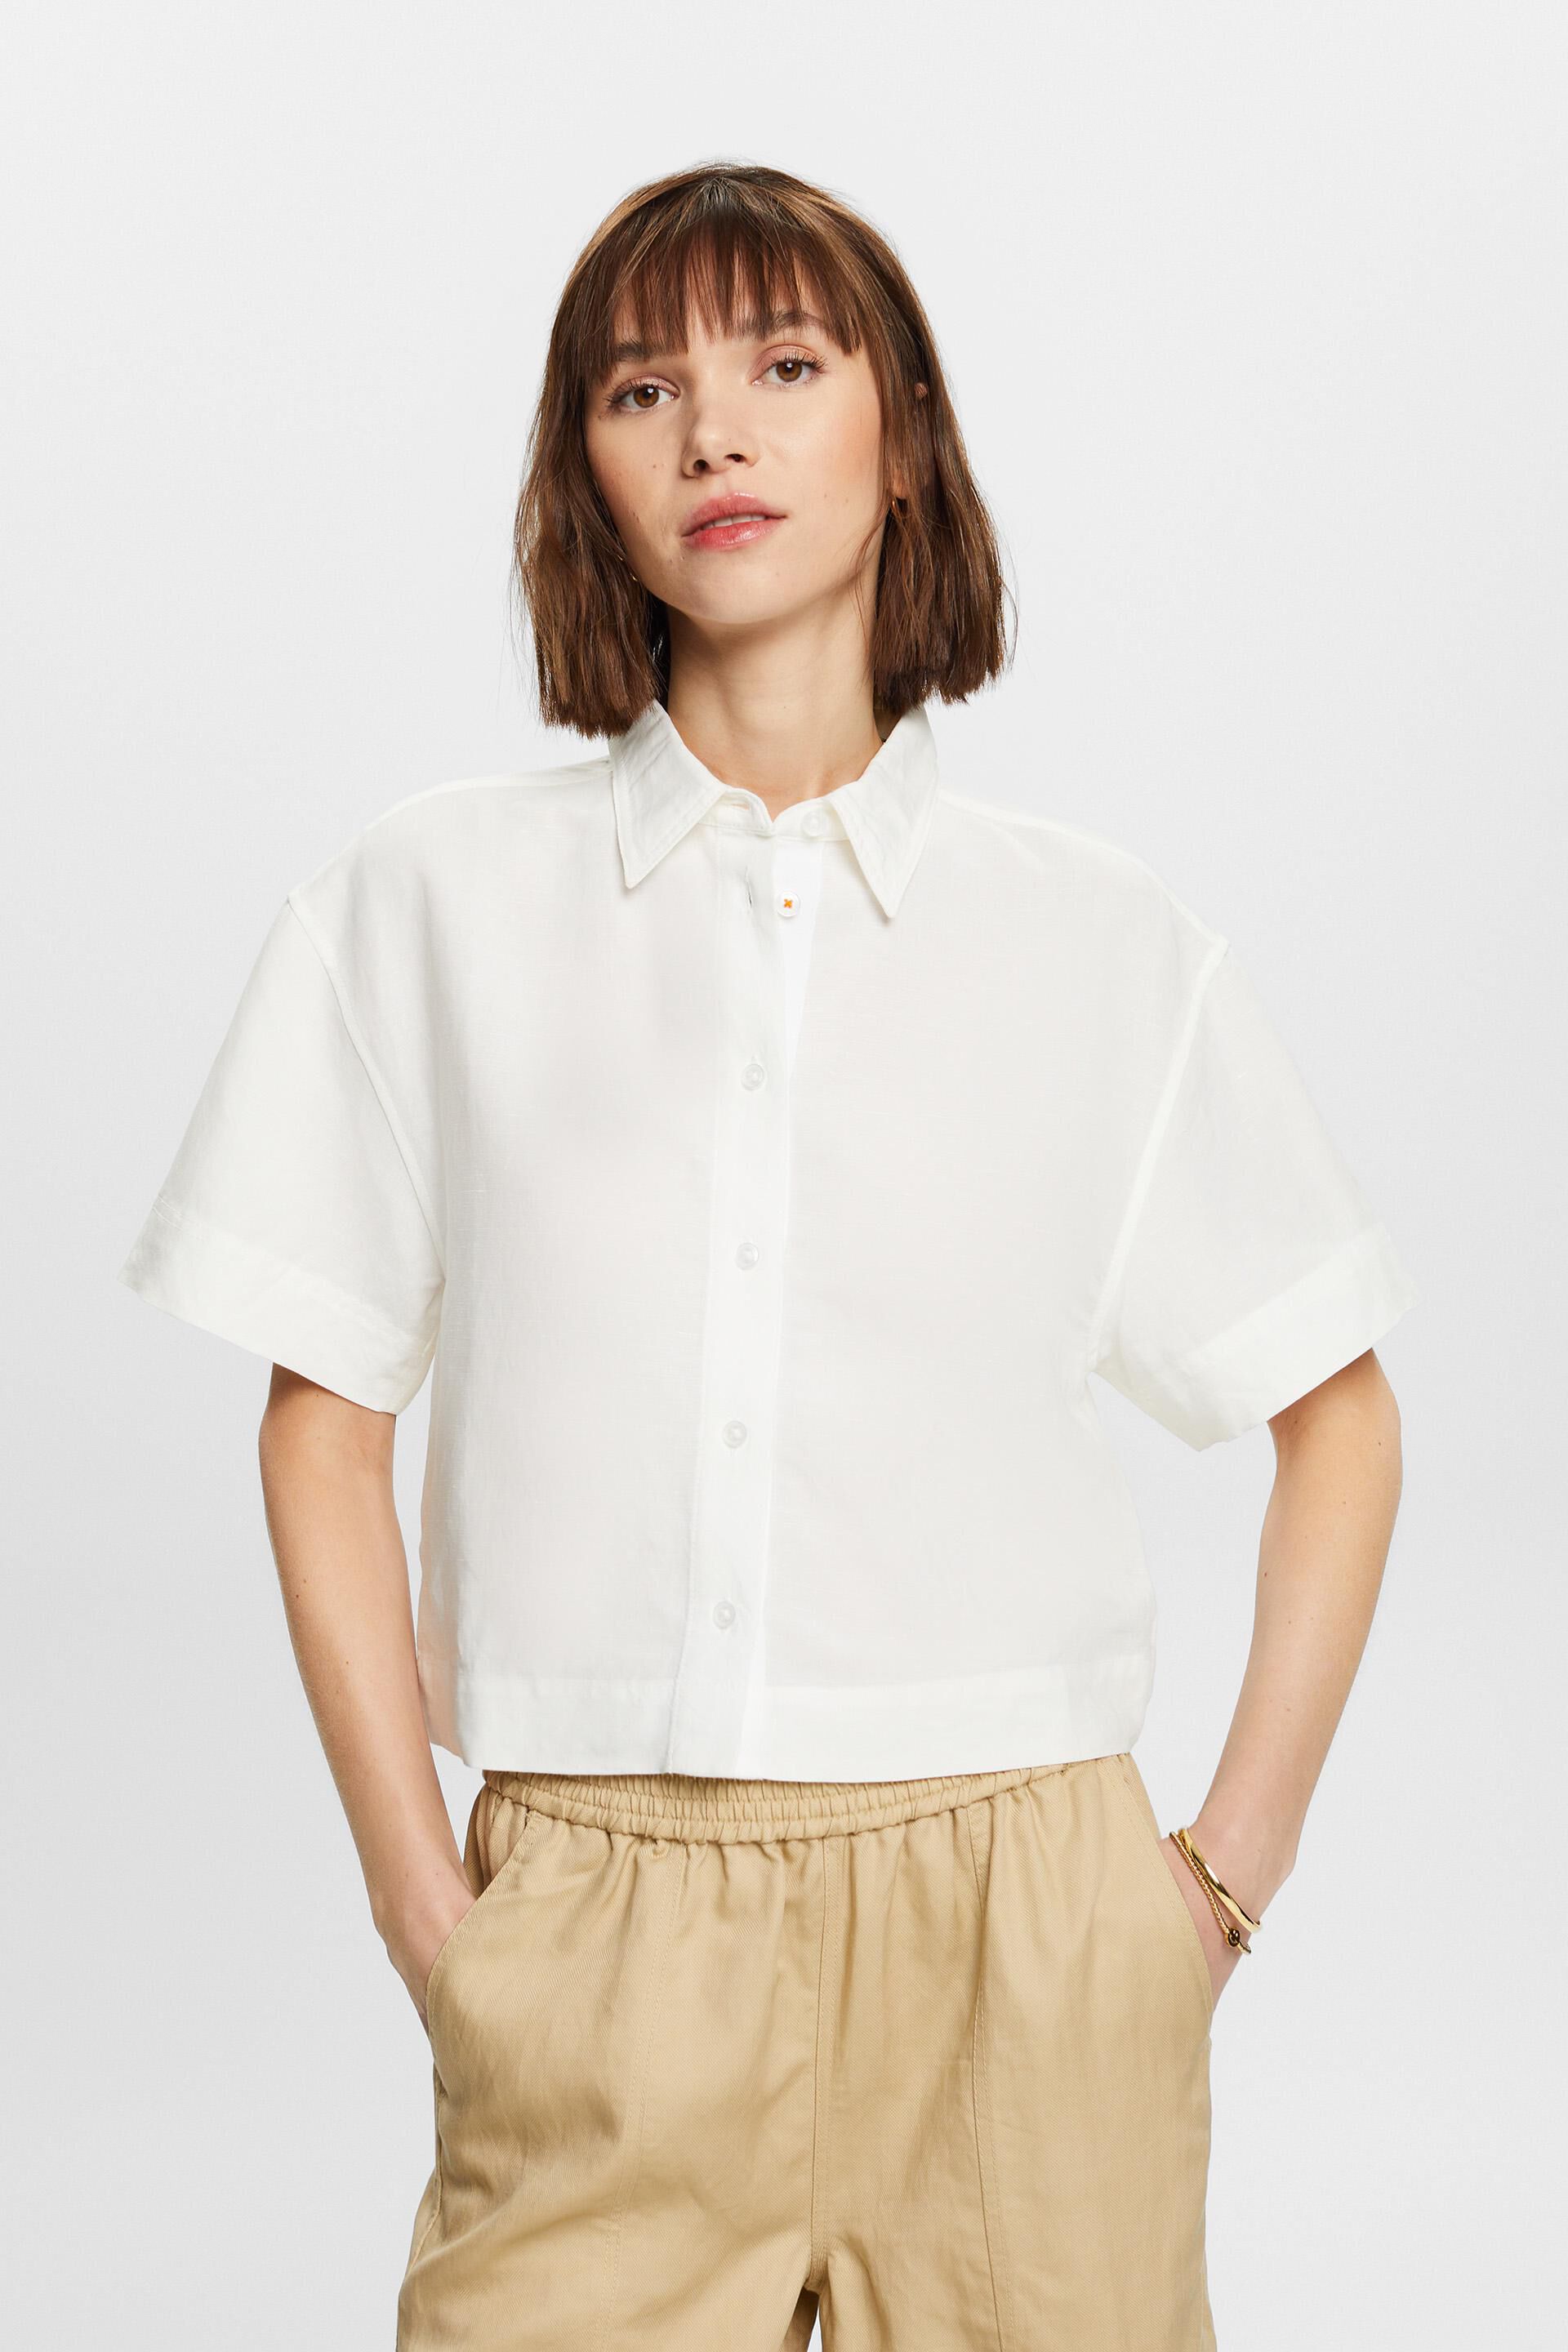 Esprit Cropped shirt blouse, blend linen